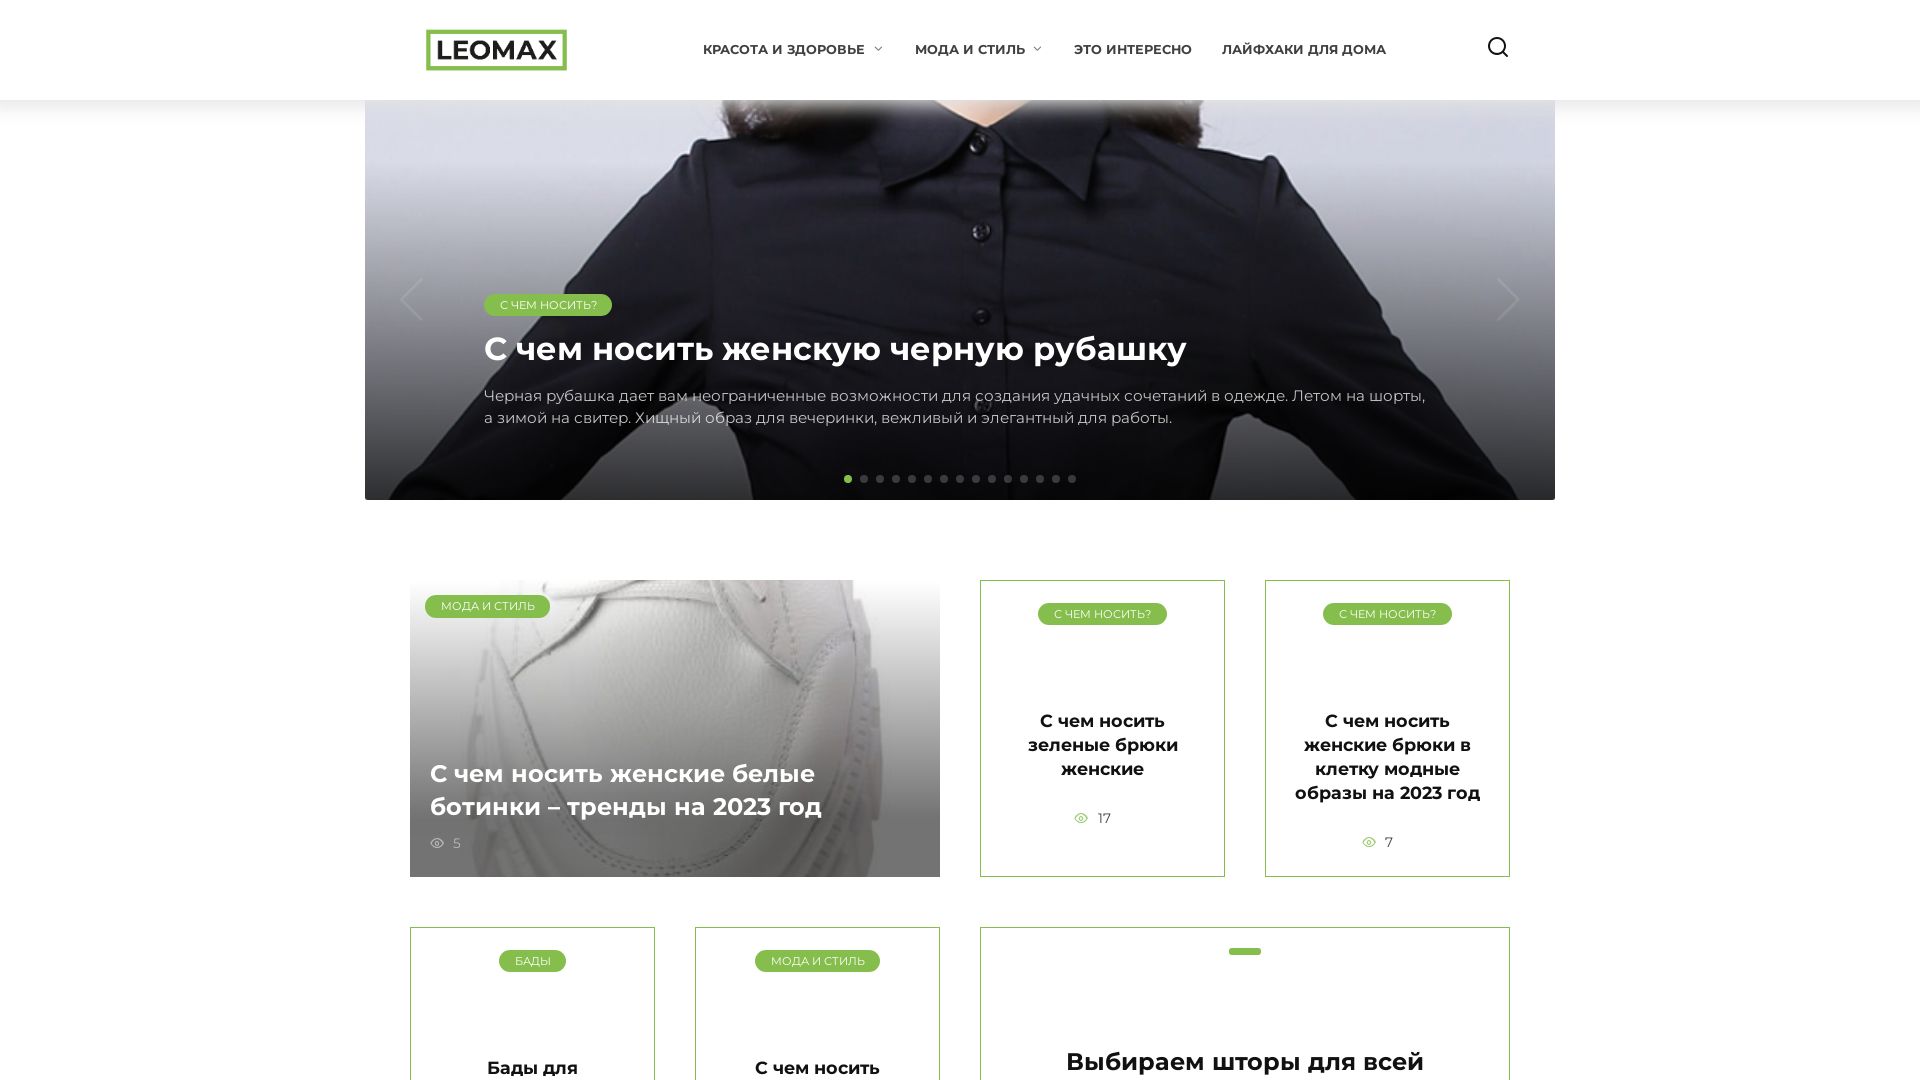 Estado web blog.leomax24.ru está   ONLINE